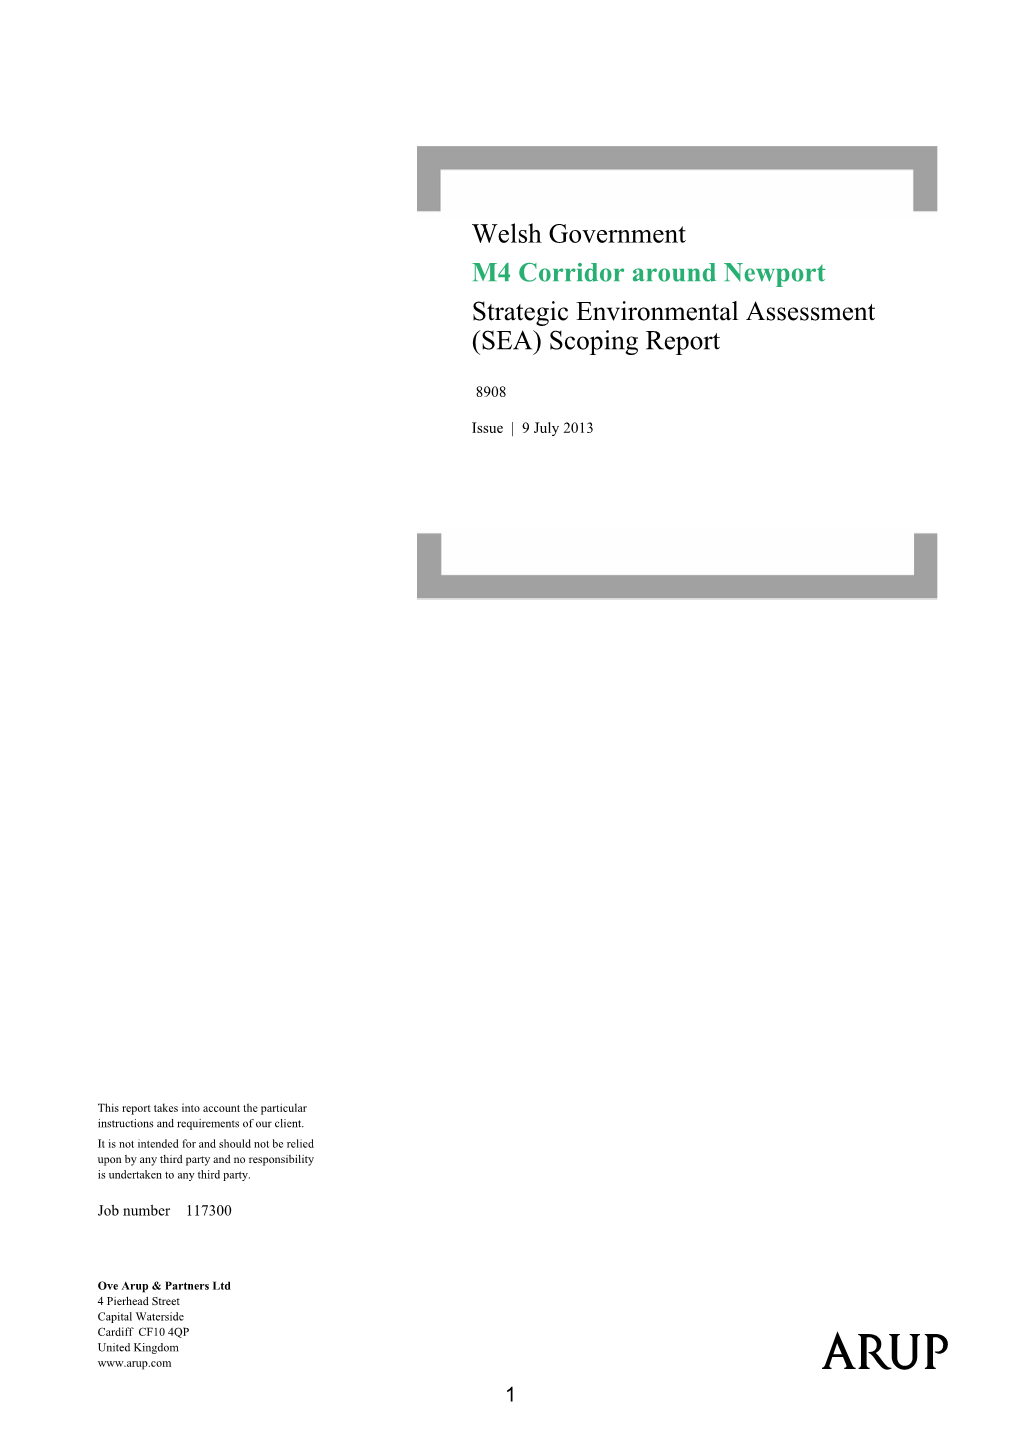 Welsh Government M4 Corridor Around Newport Strategic Environmental Assessment (SEA) Scoping Report